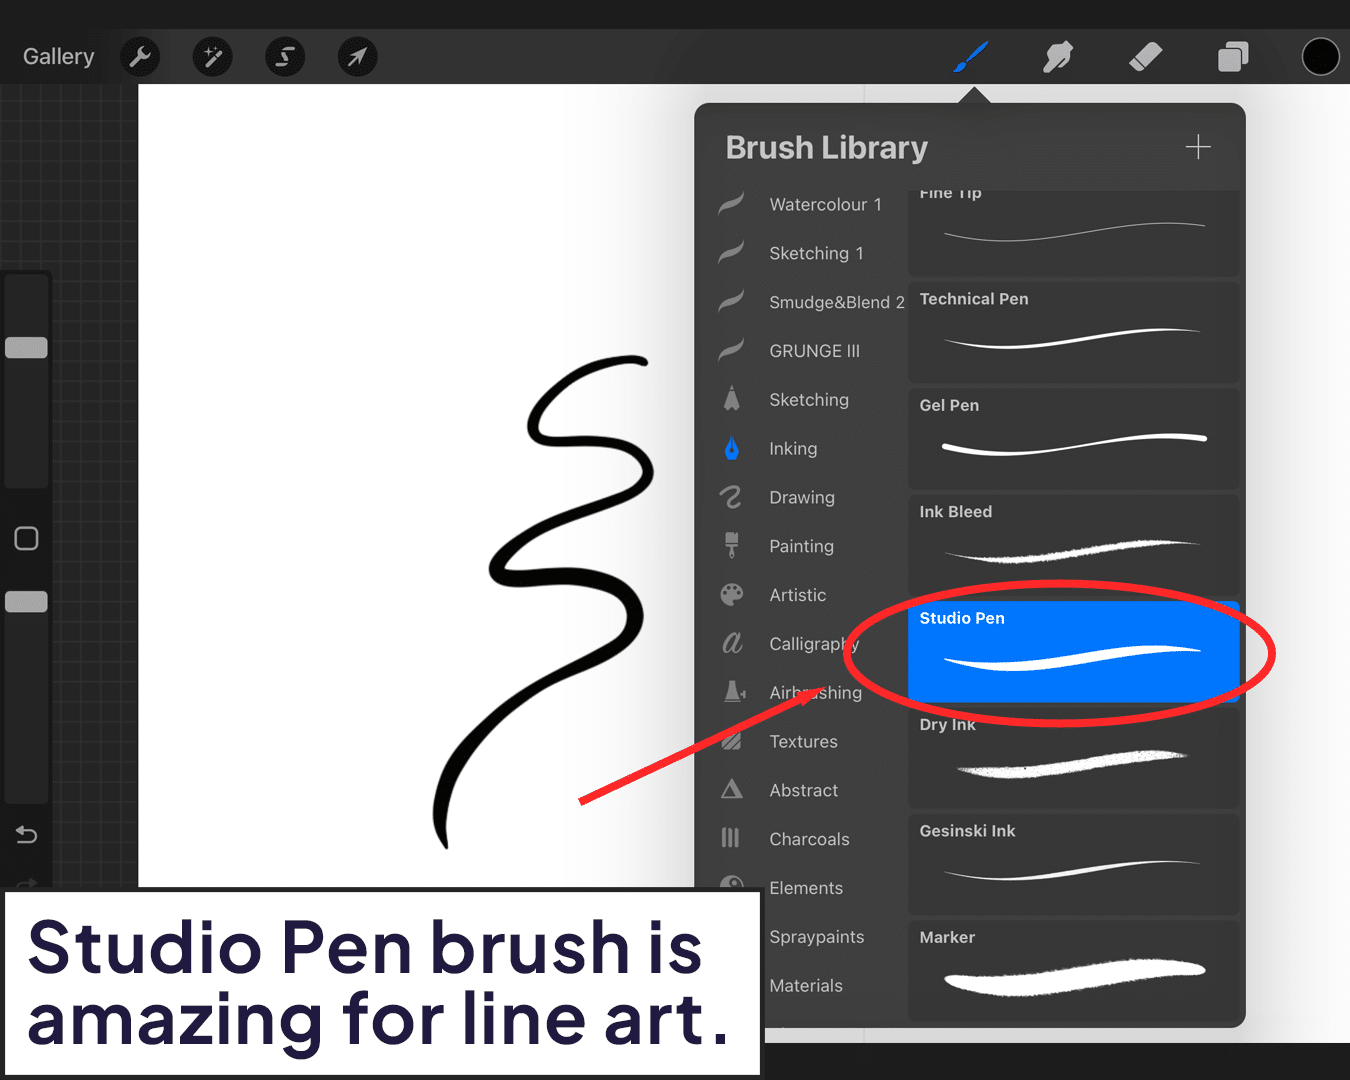 Studio pen brush